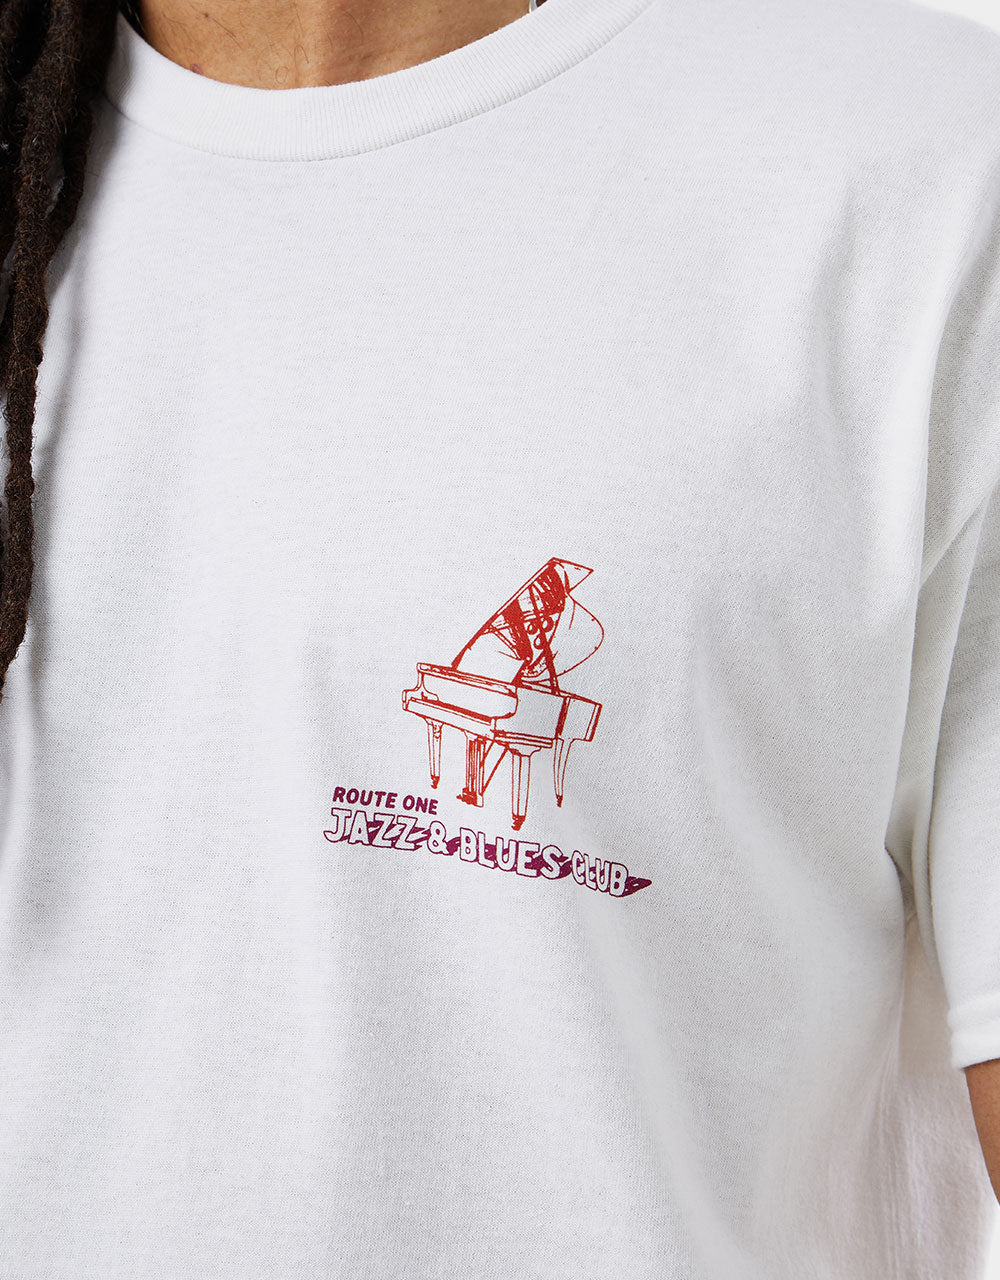 Route One Jazz Club T-Shirt - White